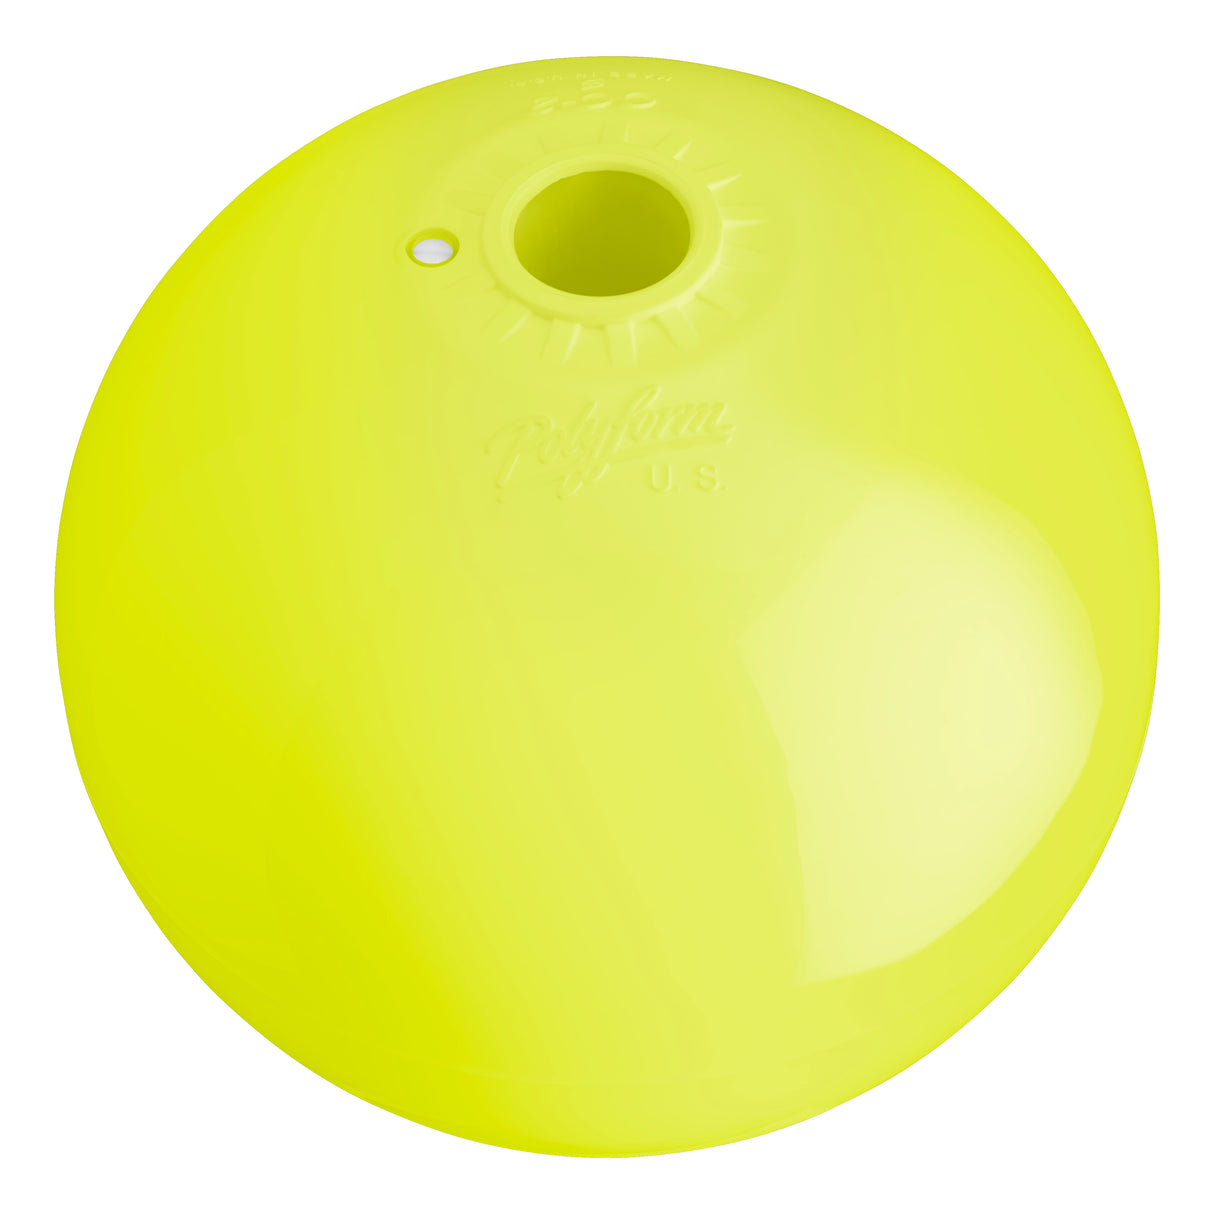 Hole through center mooring and marker buoy, Polyform CC-2 Saturn Yellow angled shot